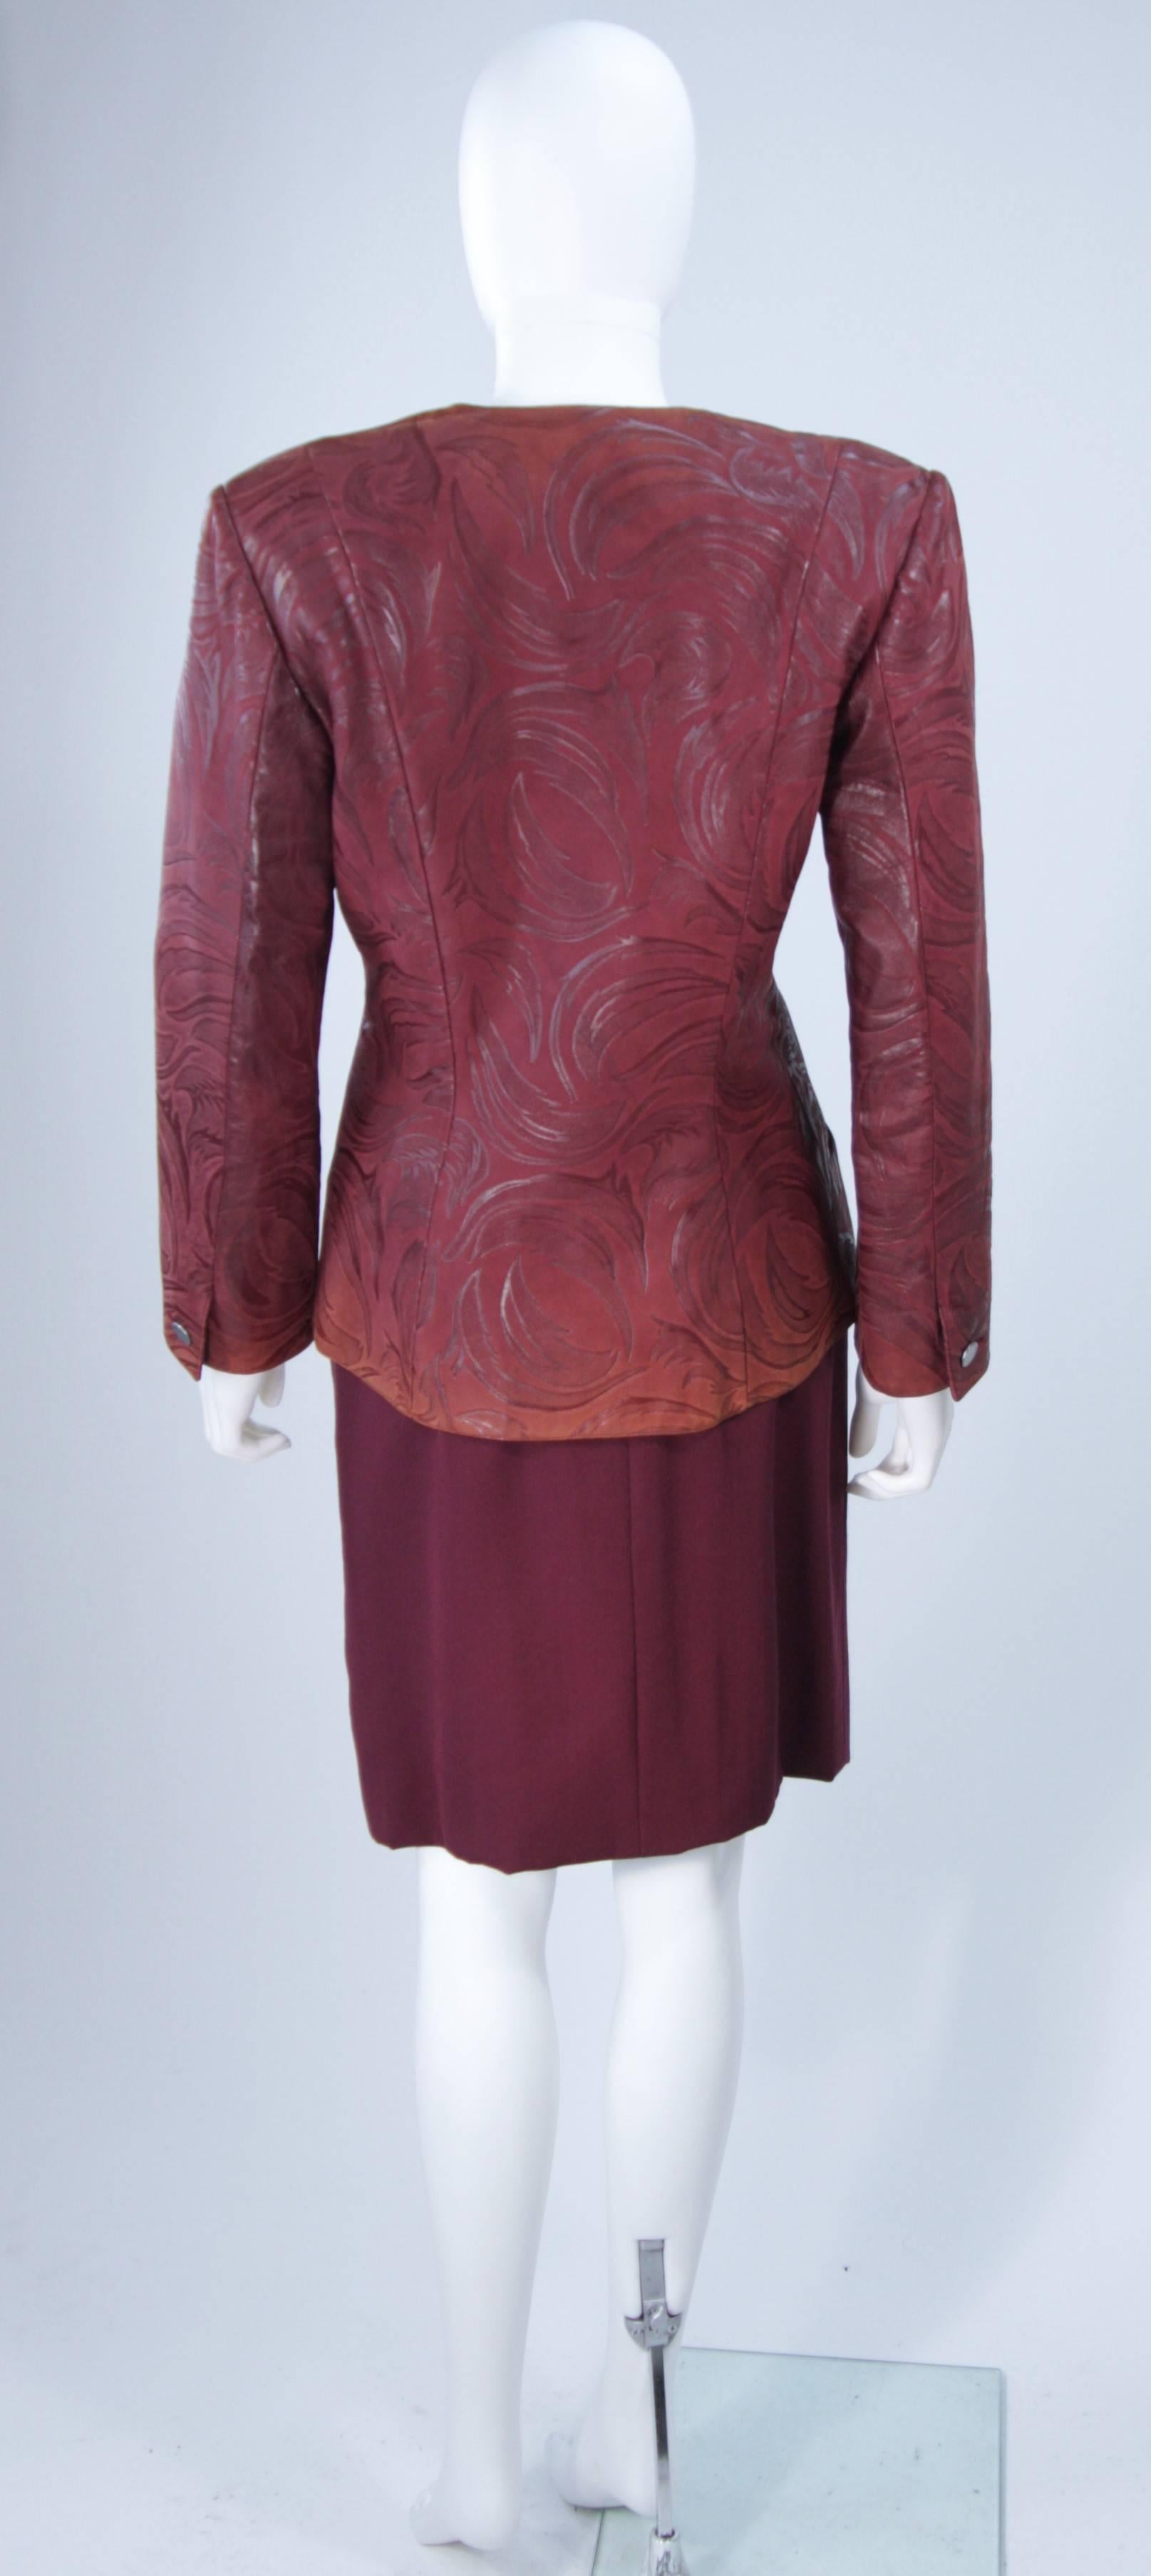 GEOFFREY BEENE Burgundy Embossed Suede Skirt Suit Ensemble Size 2-4 1